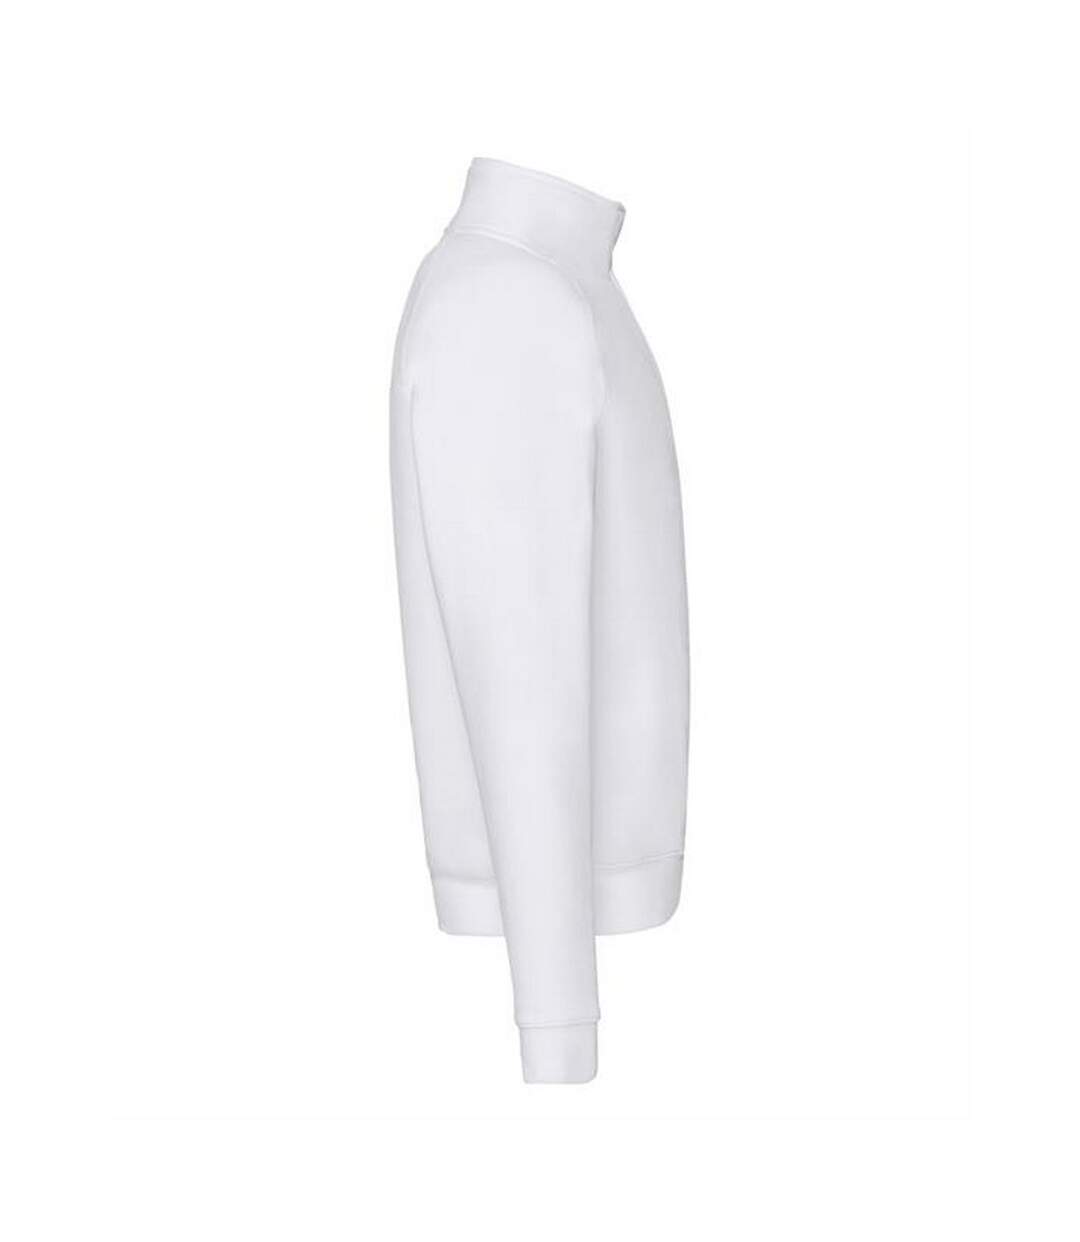 Fruit Of The Loom Mens Premium 70/30 Full Zip Sweatshirt Jacket (White)